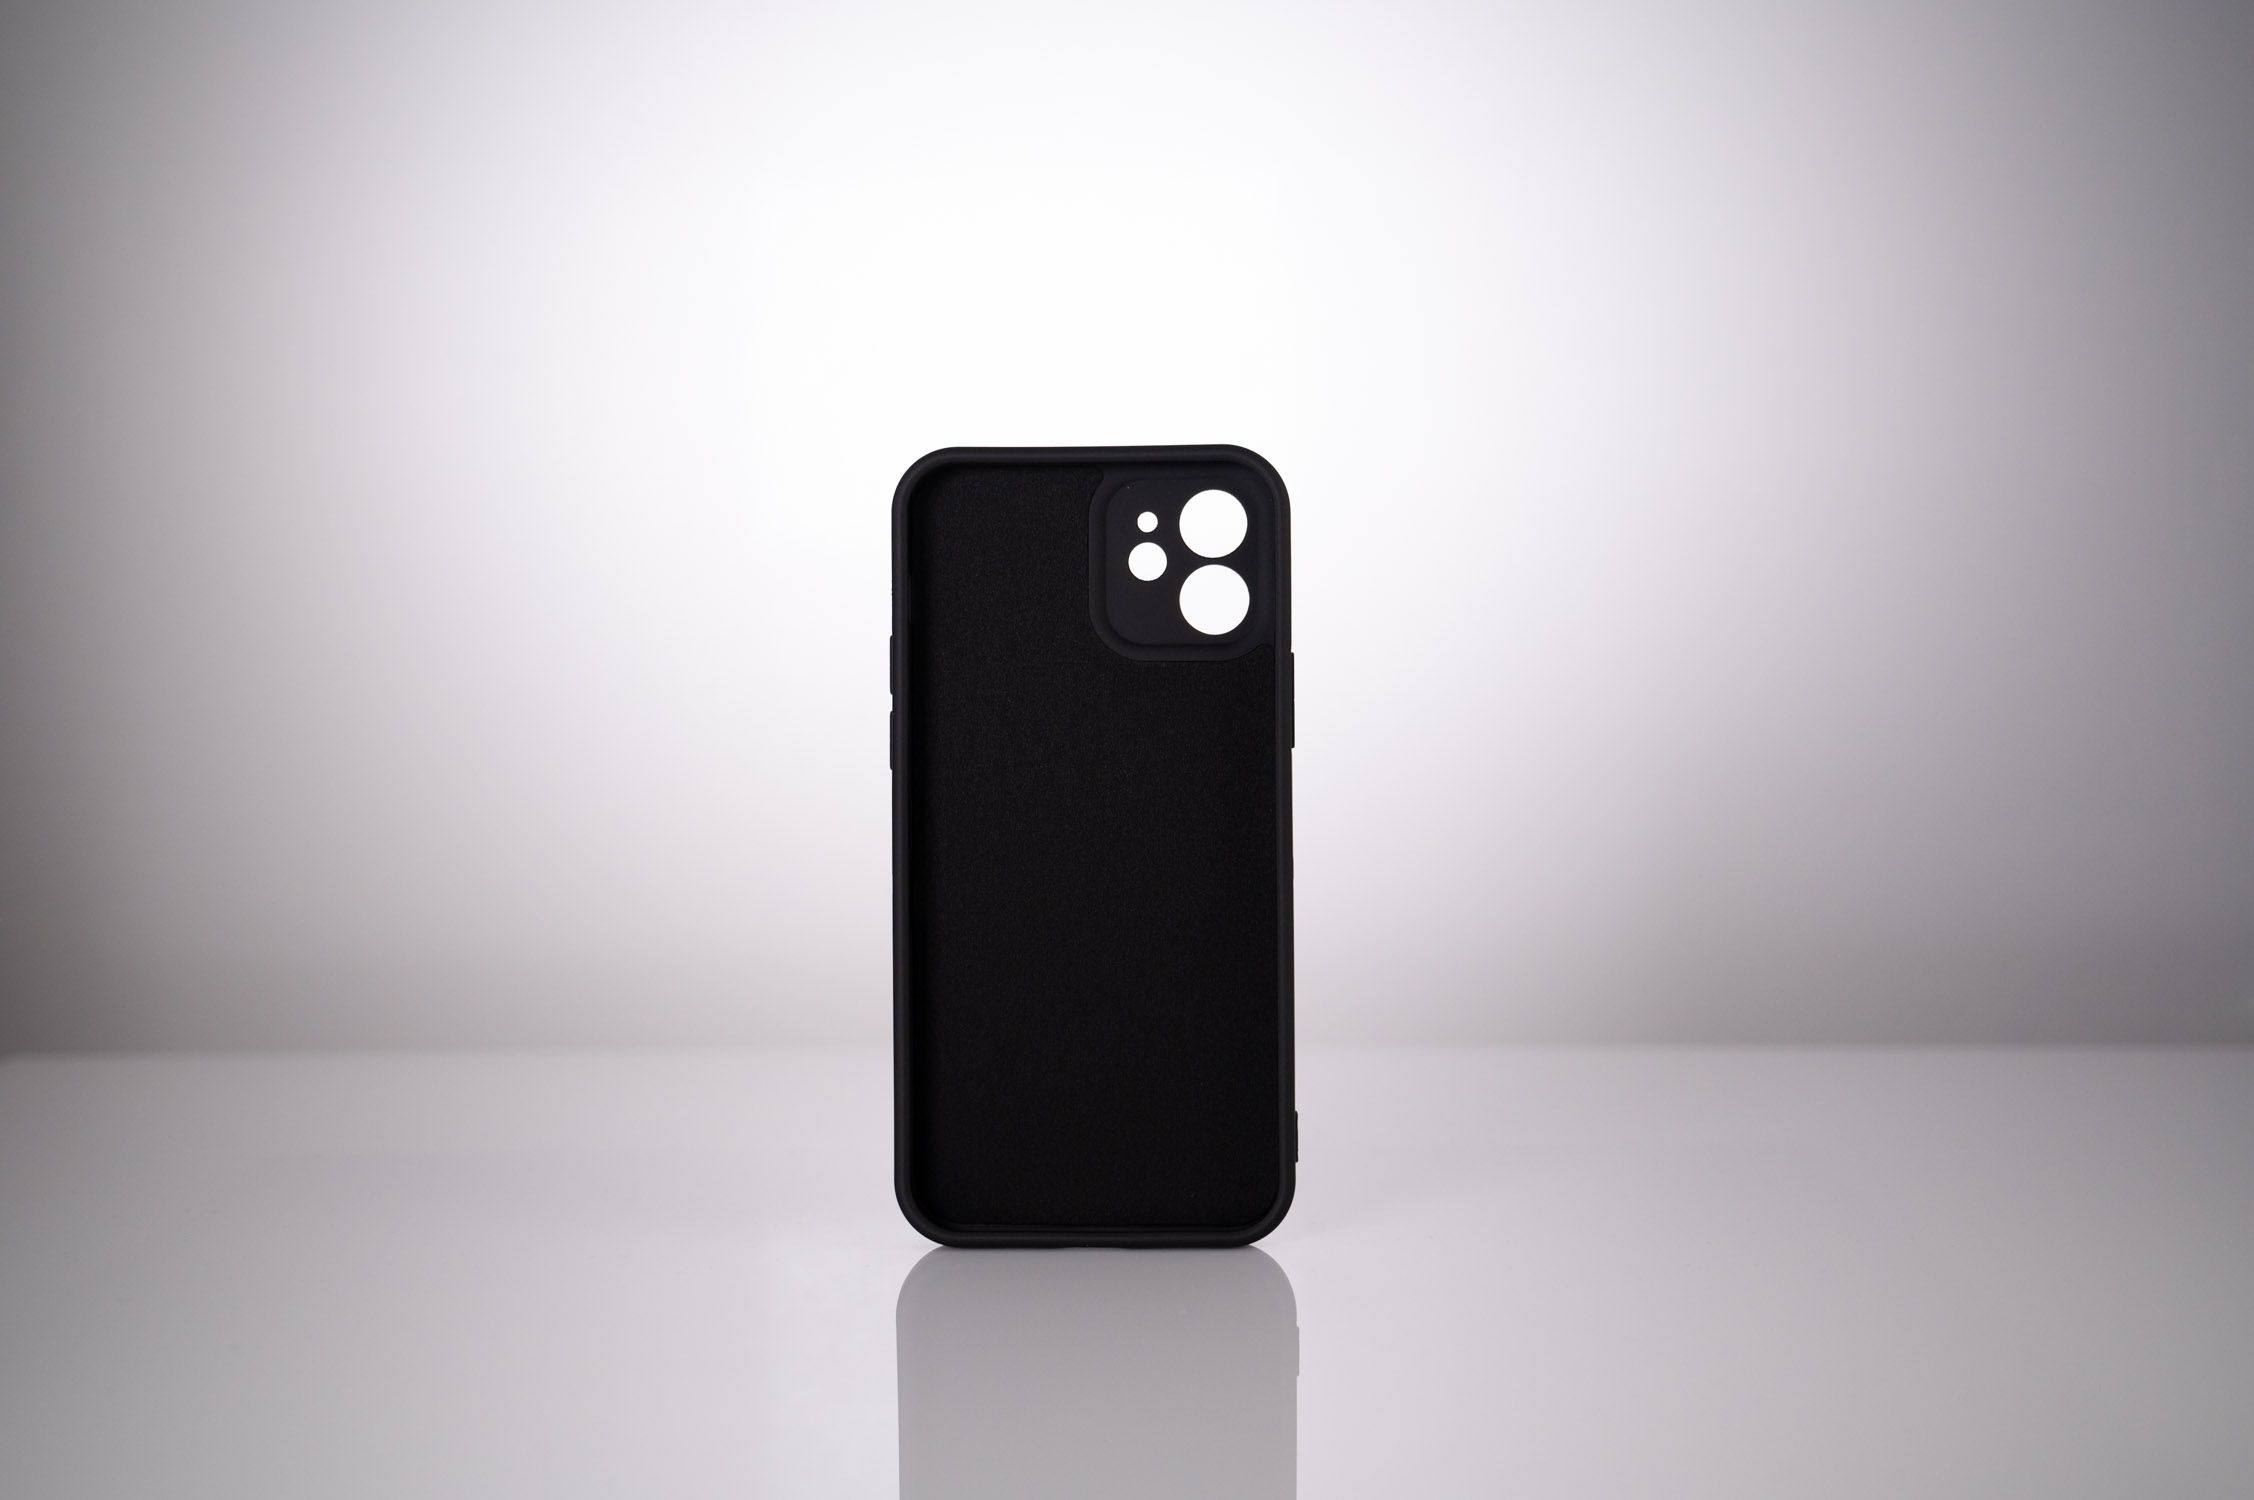 HUSA SMARTPHONE Spacer pentru Iphone 13 Mini, grosime 1.5mm, protectie suplimentara antisoc la colturi, material flexibil TPU, transparenta 